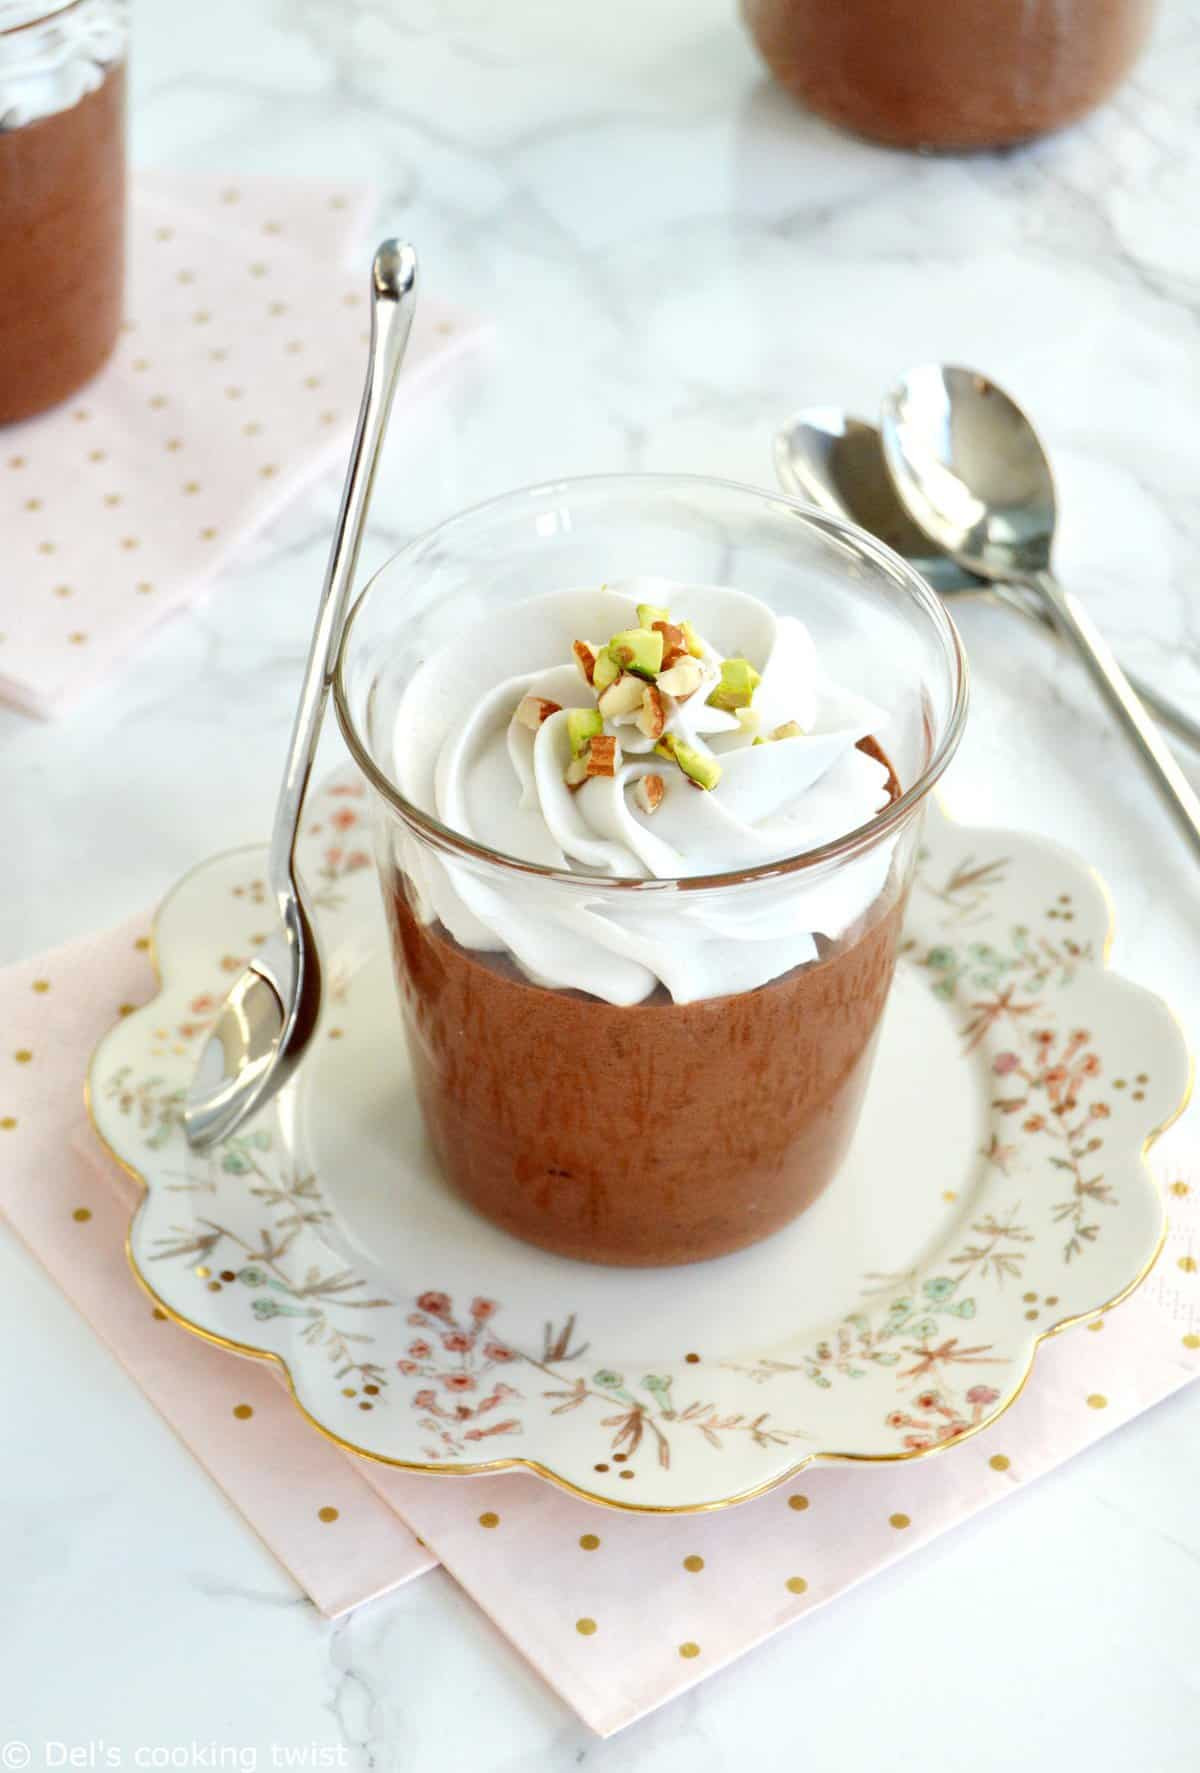 Coconut Cream Chocolate Mousse Inspirational Vegan Chocolate Mousse with Whipped Coconut Cream